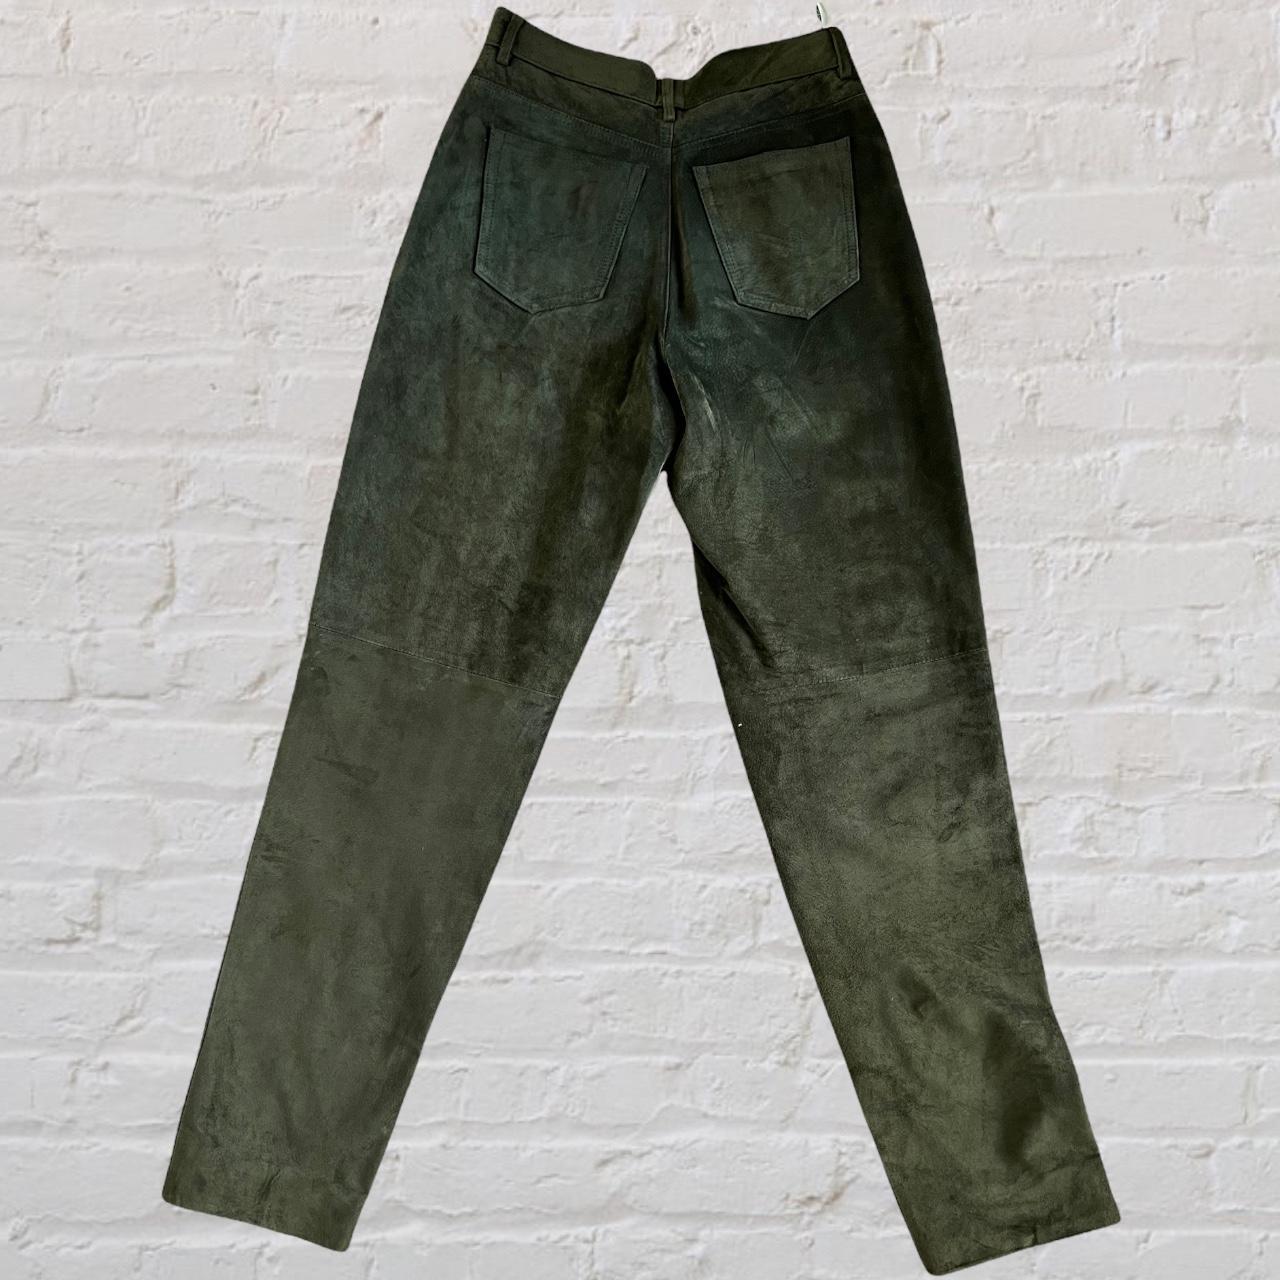 Vintage Kaliko khaki suede trousers. 100% real... - Depop